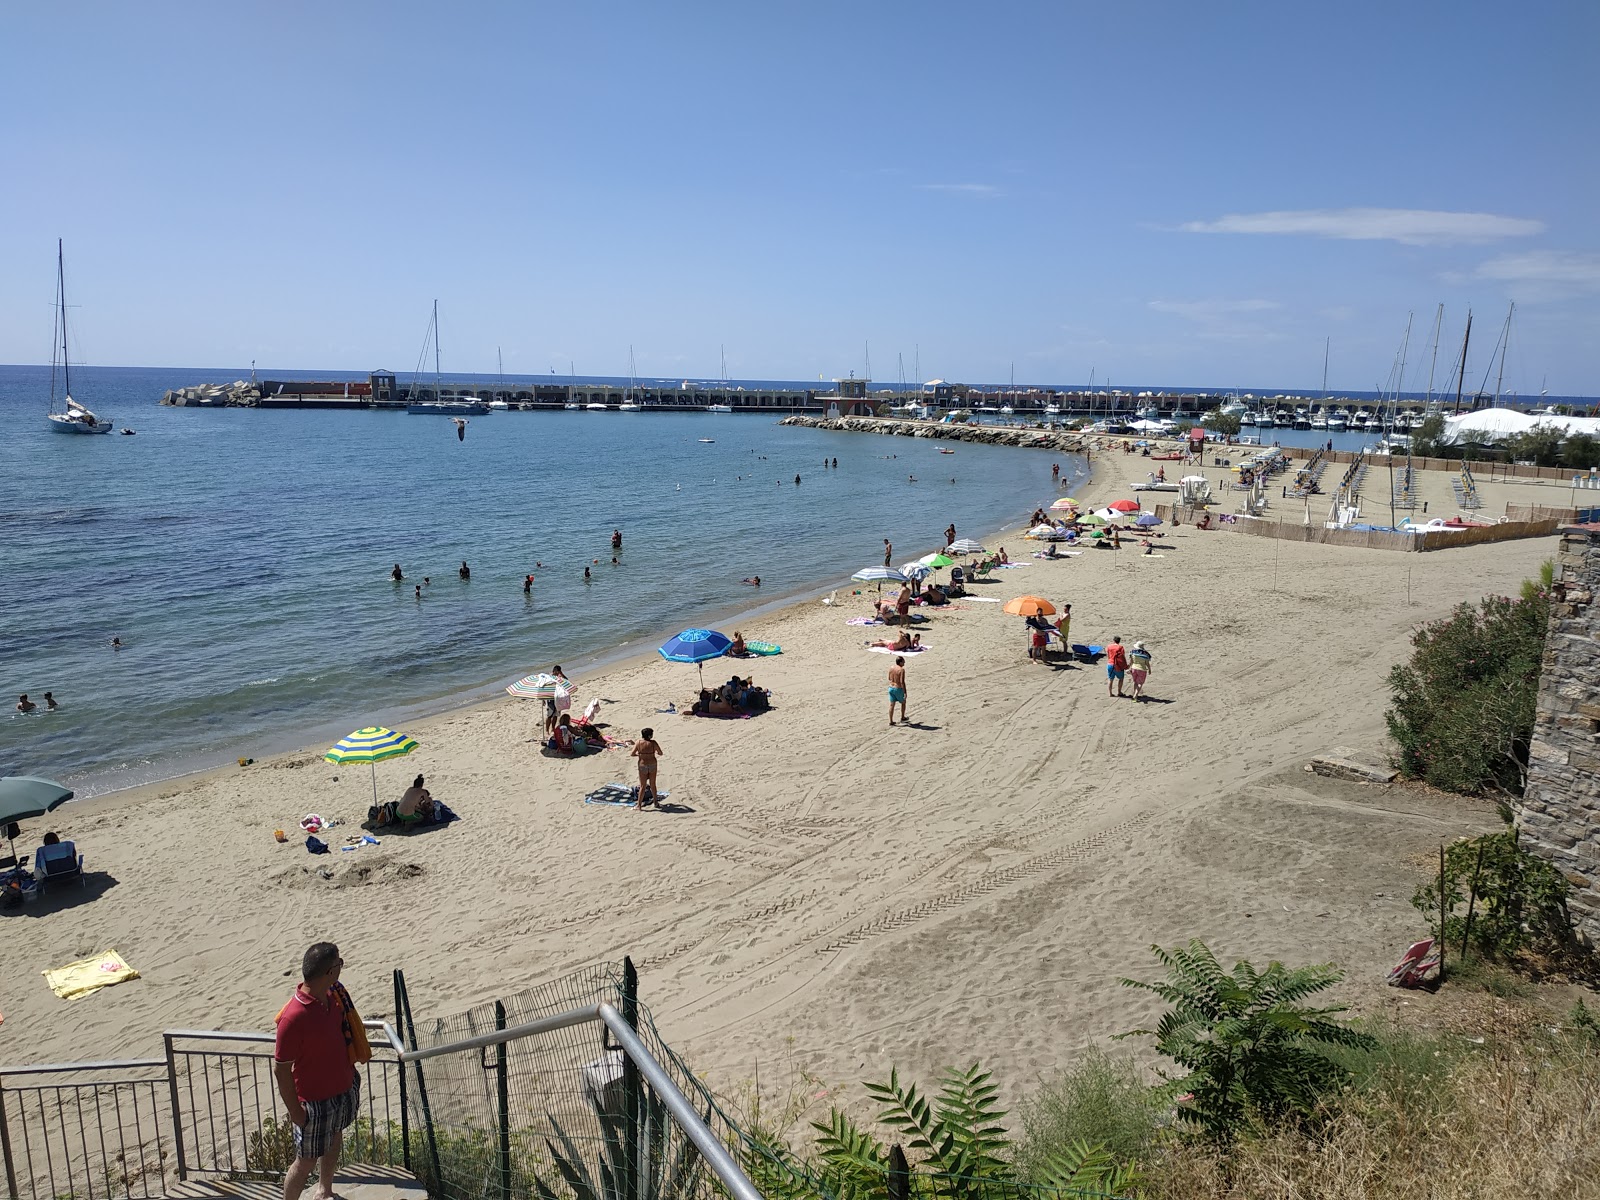 Spiaggia del Porto Acciaroli'in fotoğrafı i̇nce kahverengi kum yüzey ile